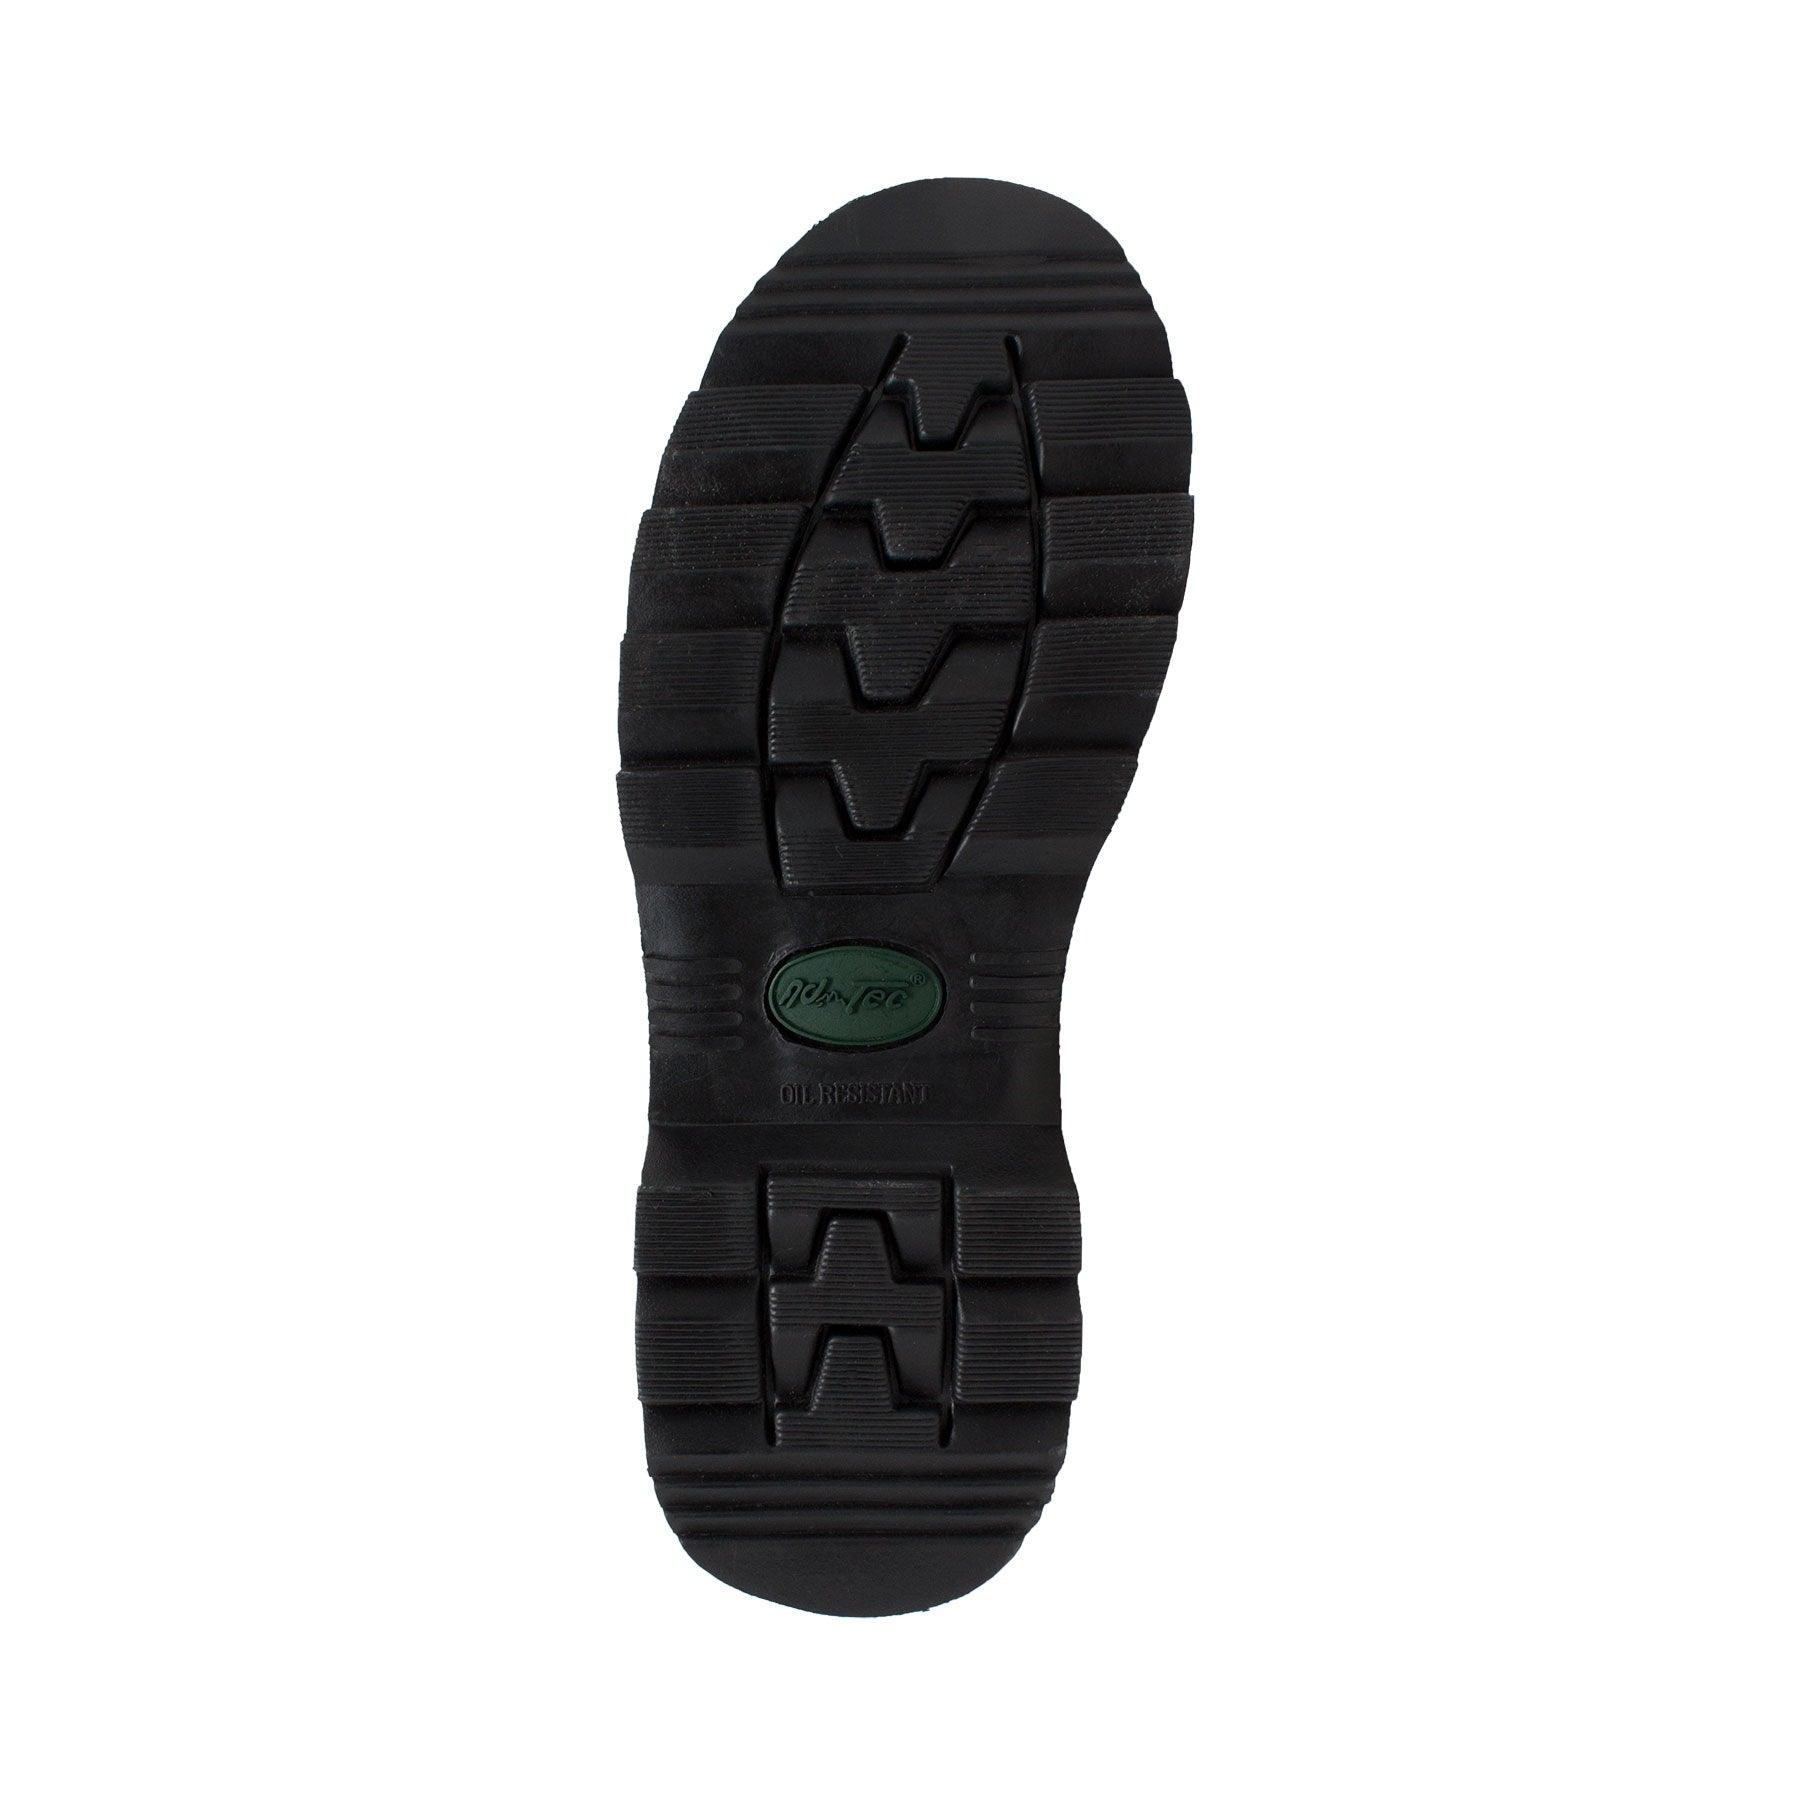 AdTec Men's 6" Composite Toe Boot Black - Flyclothing LLC